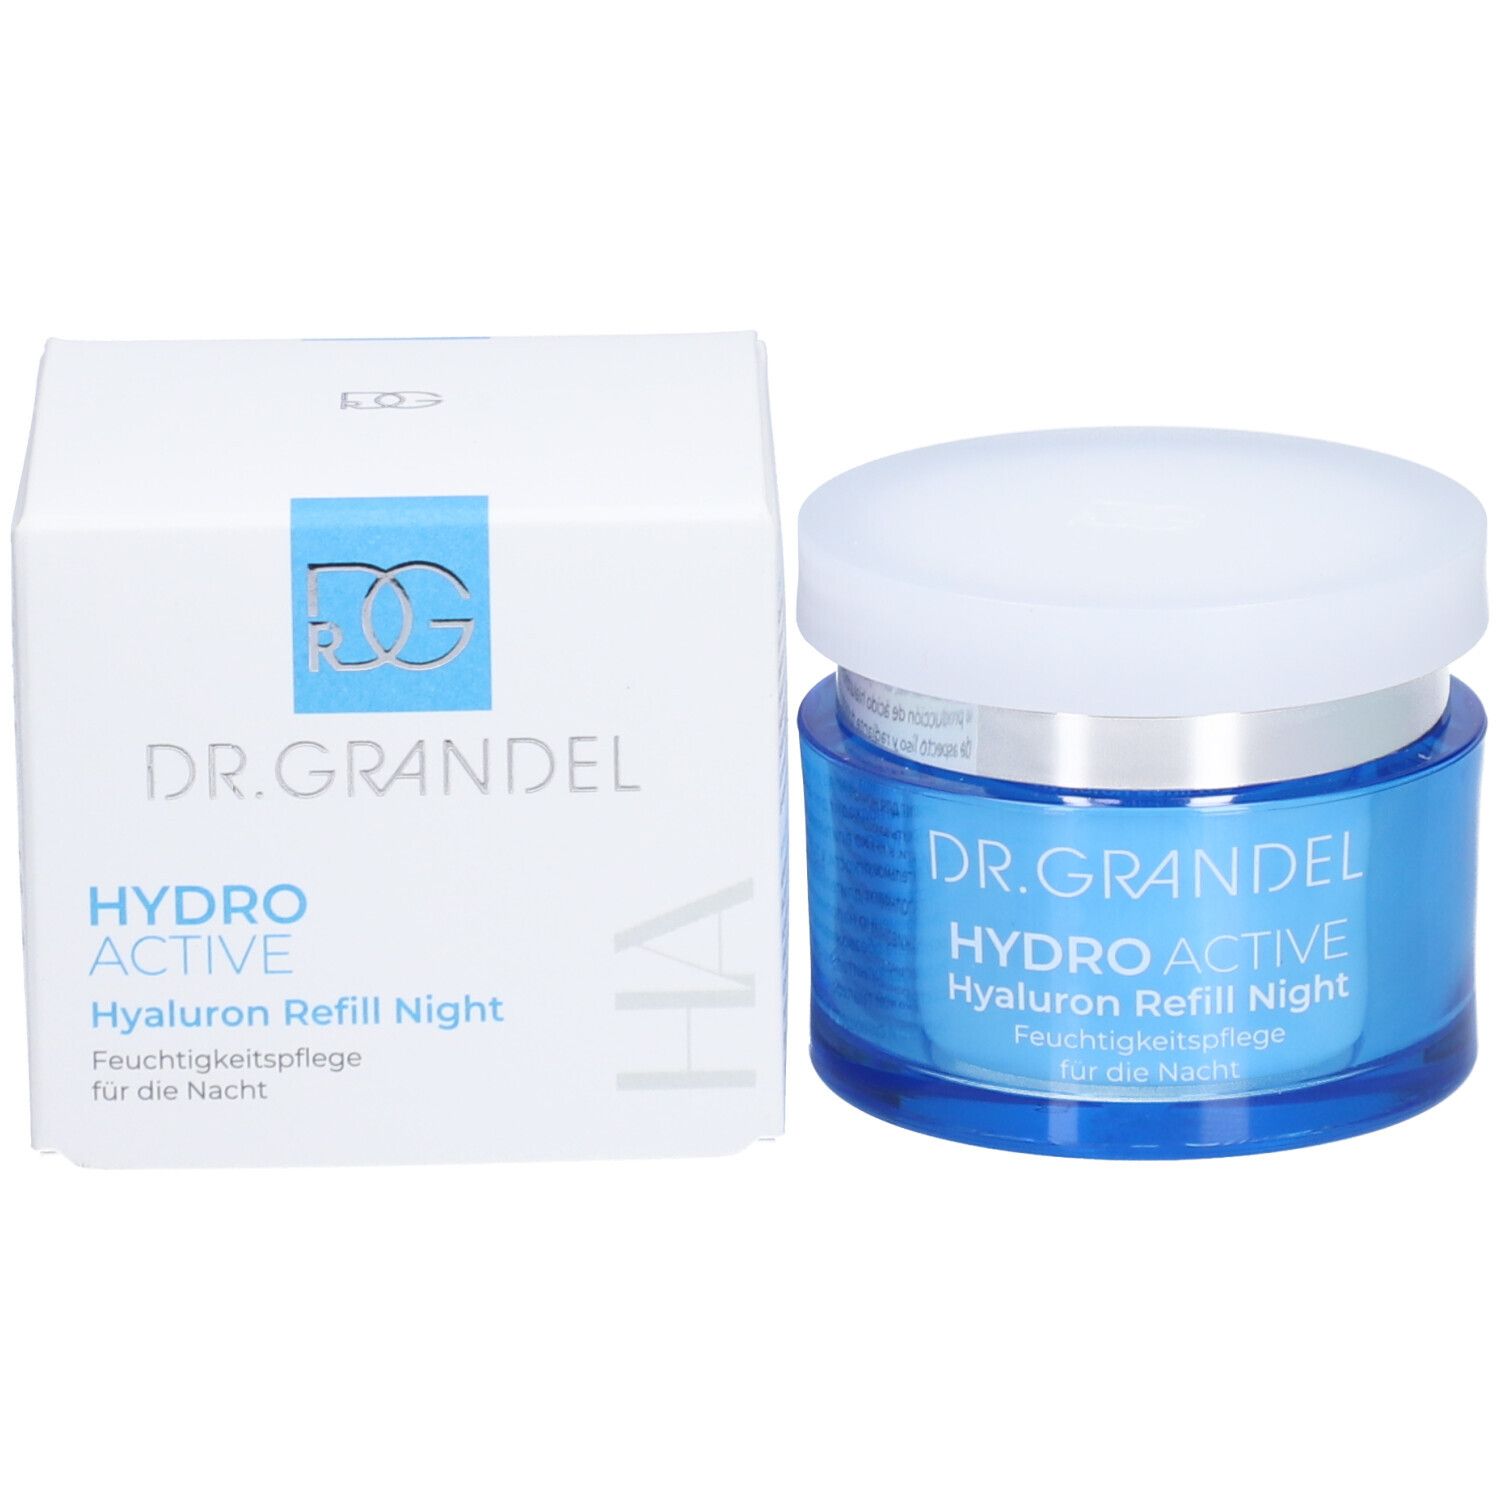 Dr Grandel Hydro Active Hyaluron Refill Night Sleeping Cream Shop Apothekech 7822